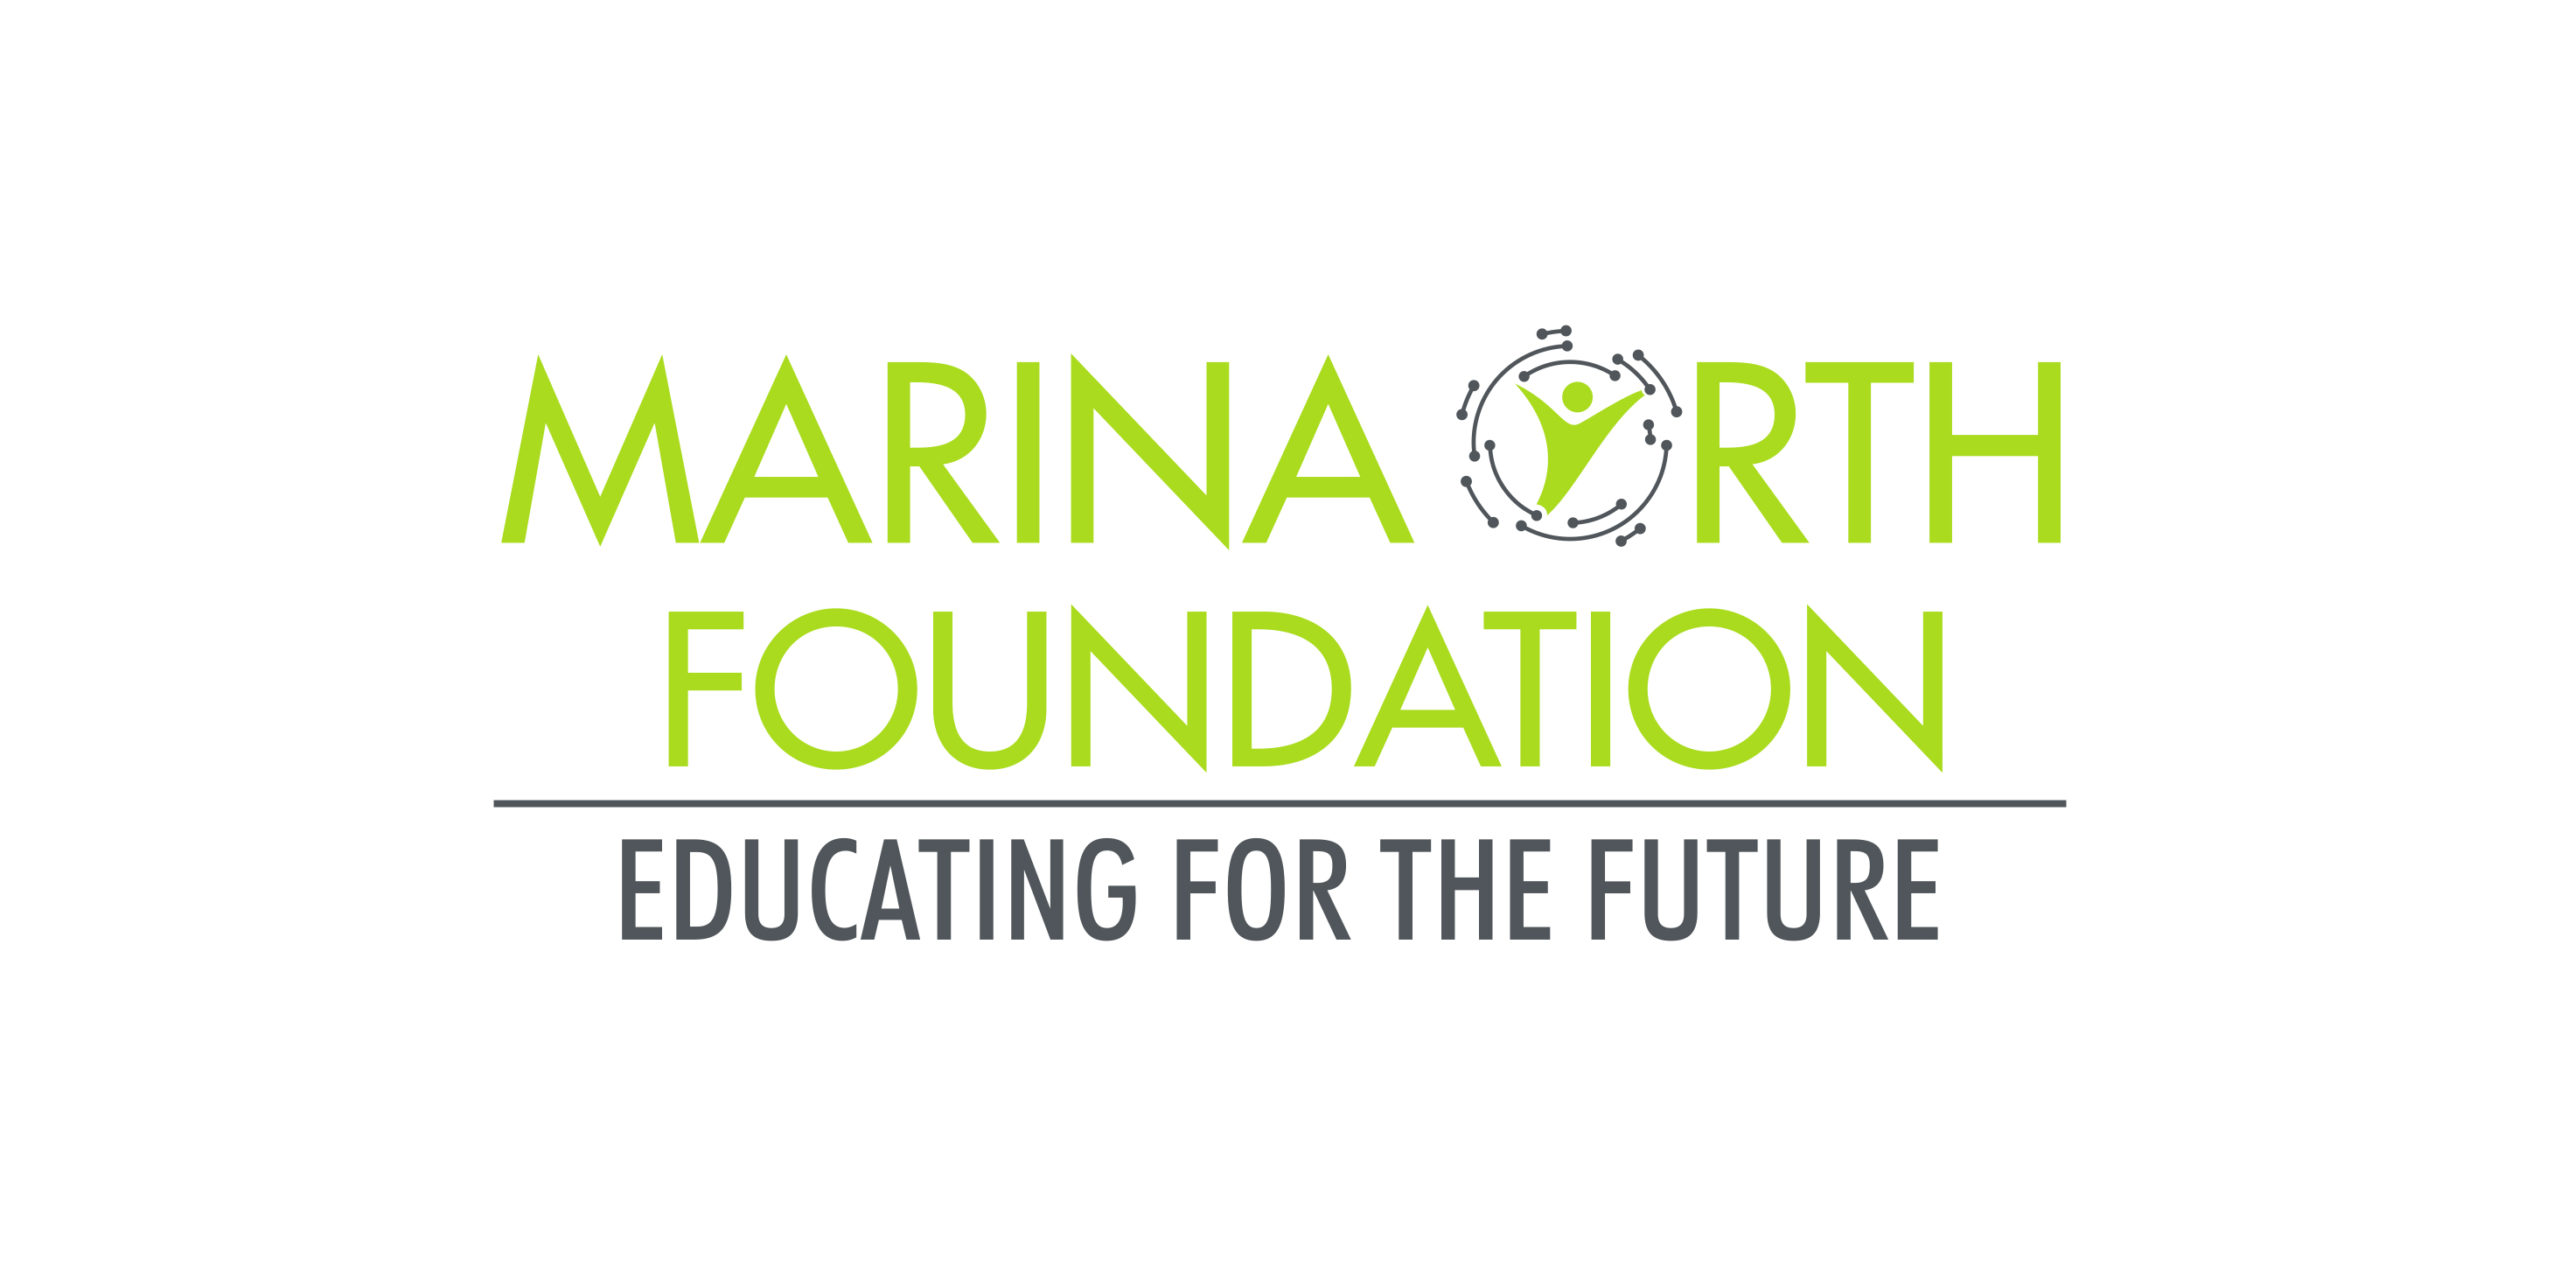 Fund Marina Orth Foundation